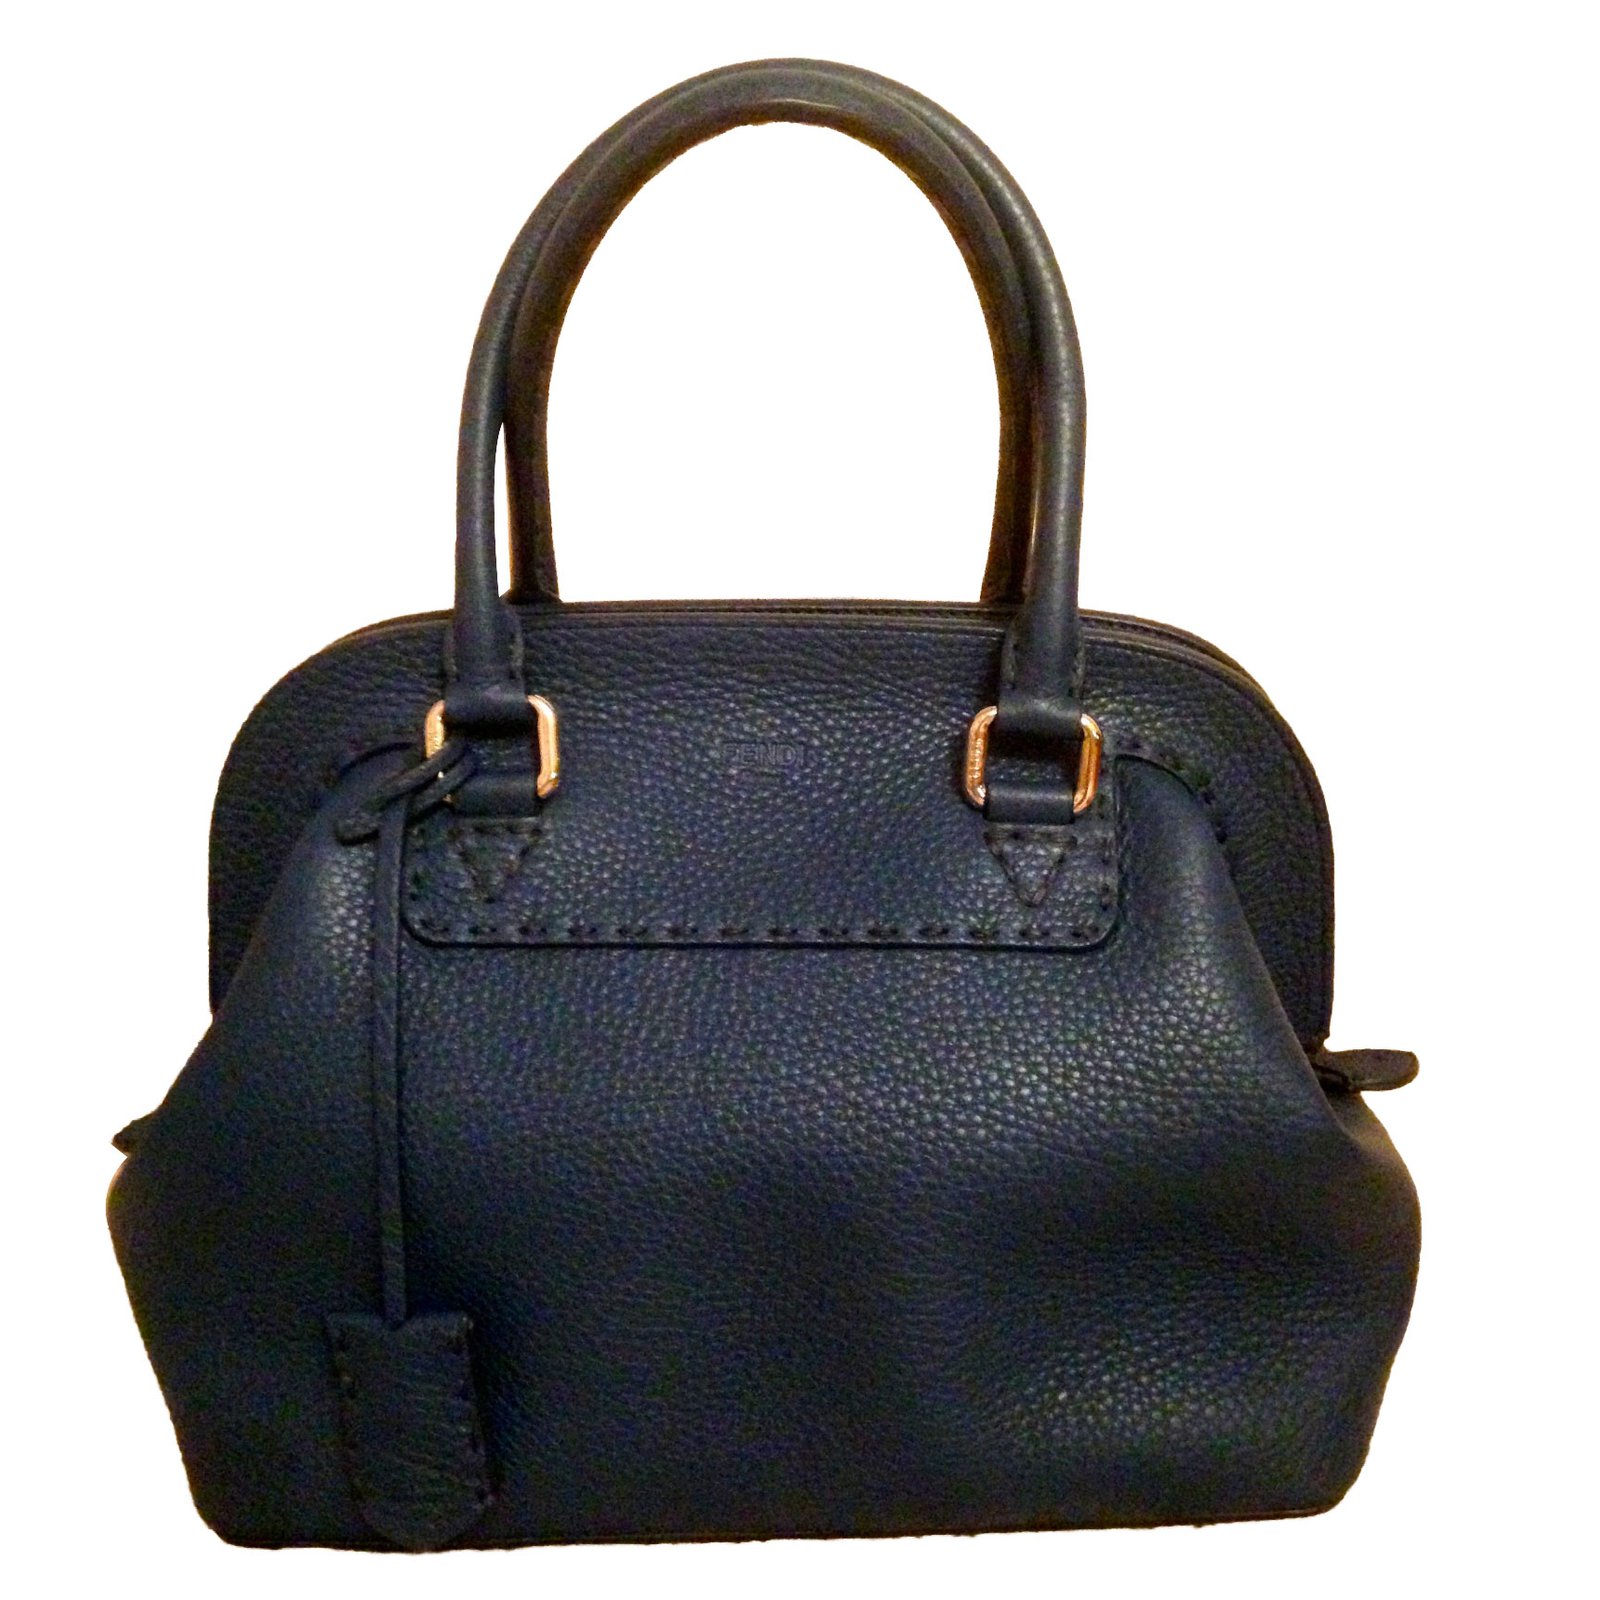 Fendi ADELE Handbags Leather Blue ref 